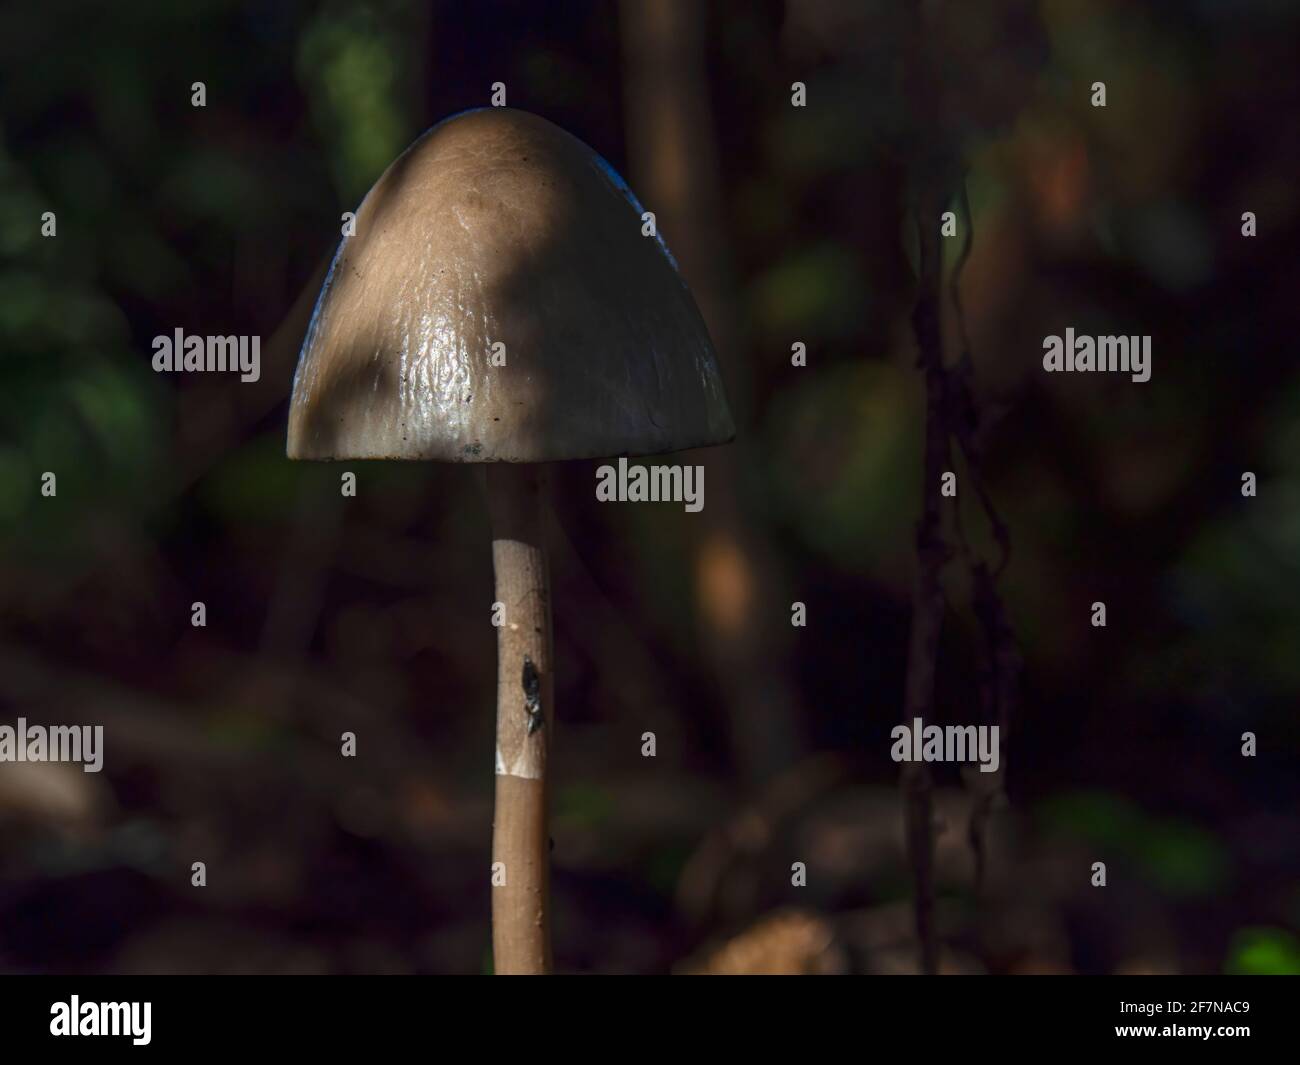 Macro photography of petticoat mottlegill mushrooms, captured in a field near the colonial town of Villa de Leyva, Colombia. Stock Photo